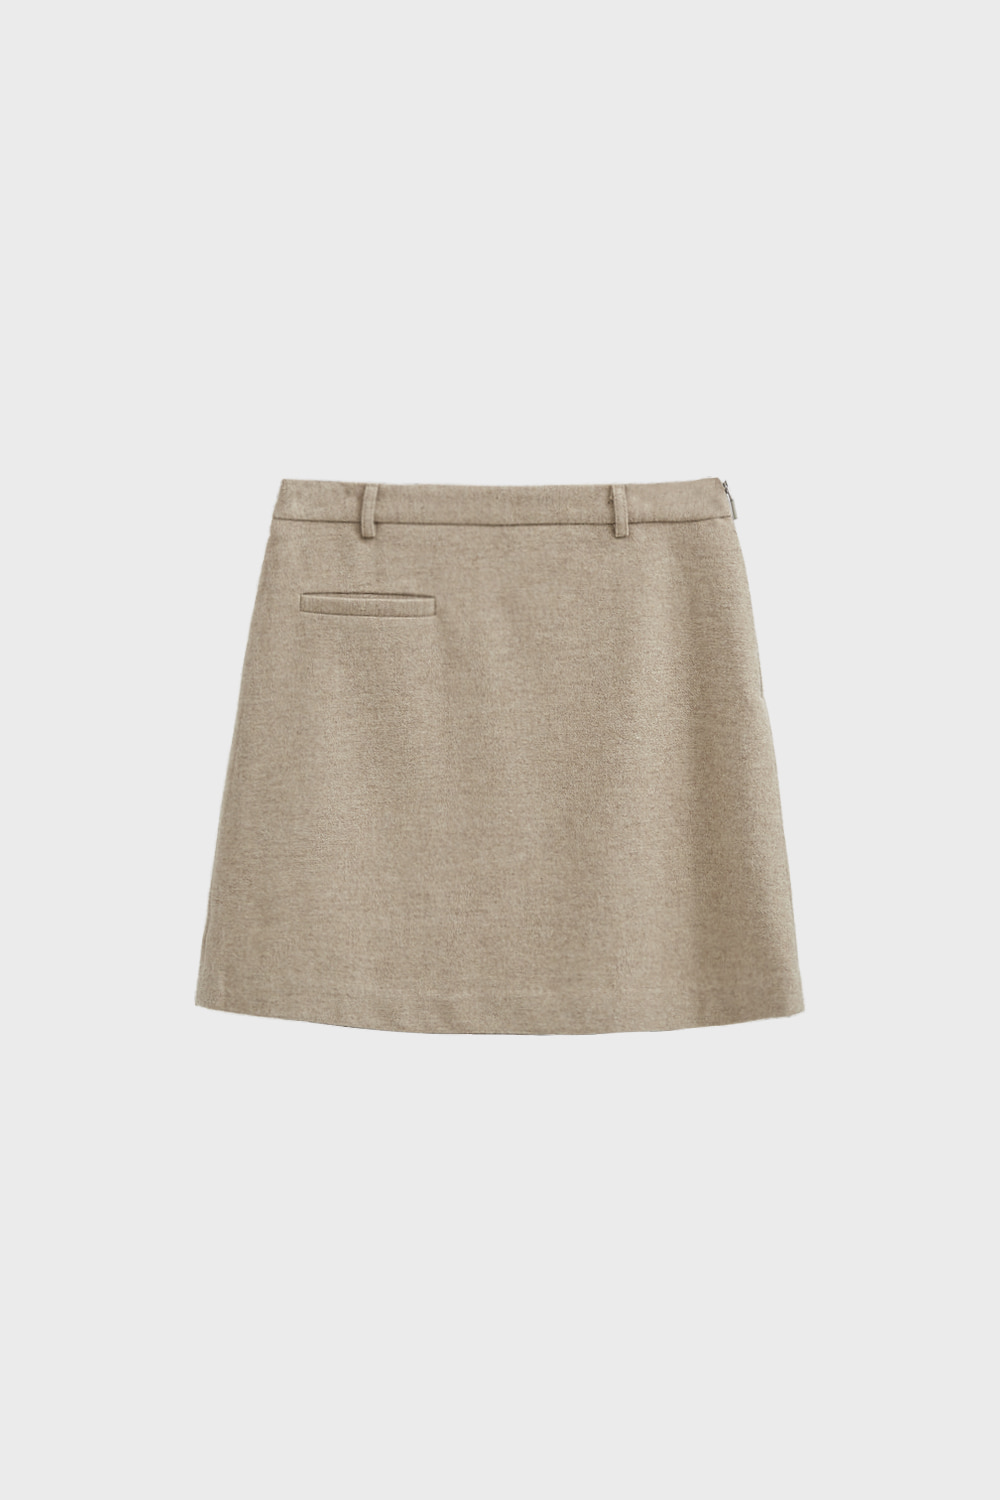 wool blend one-pocket skirt